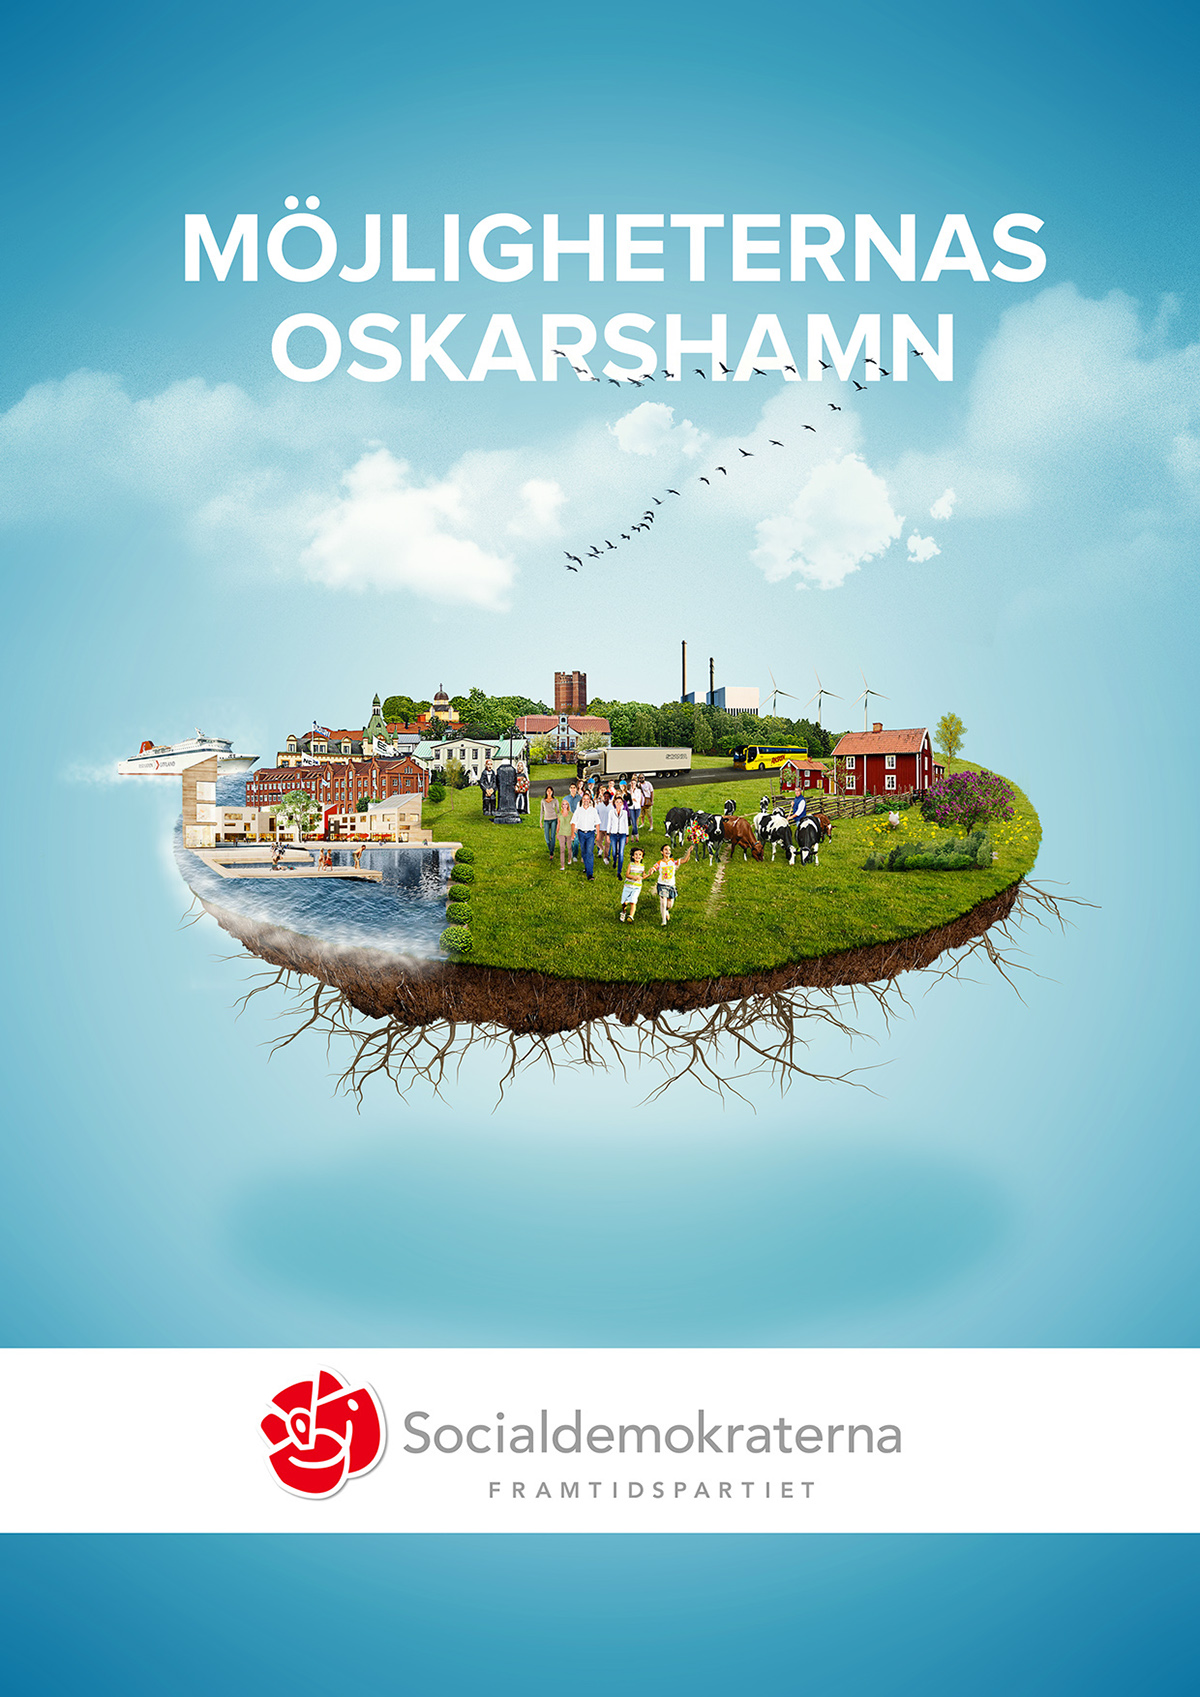 Election poster Socialdemokraterna